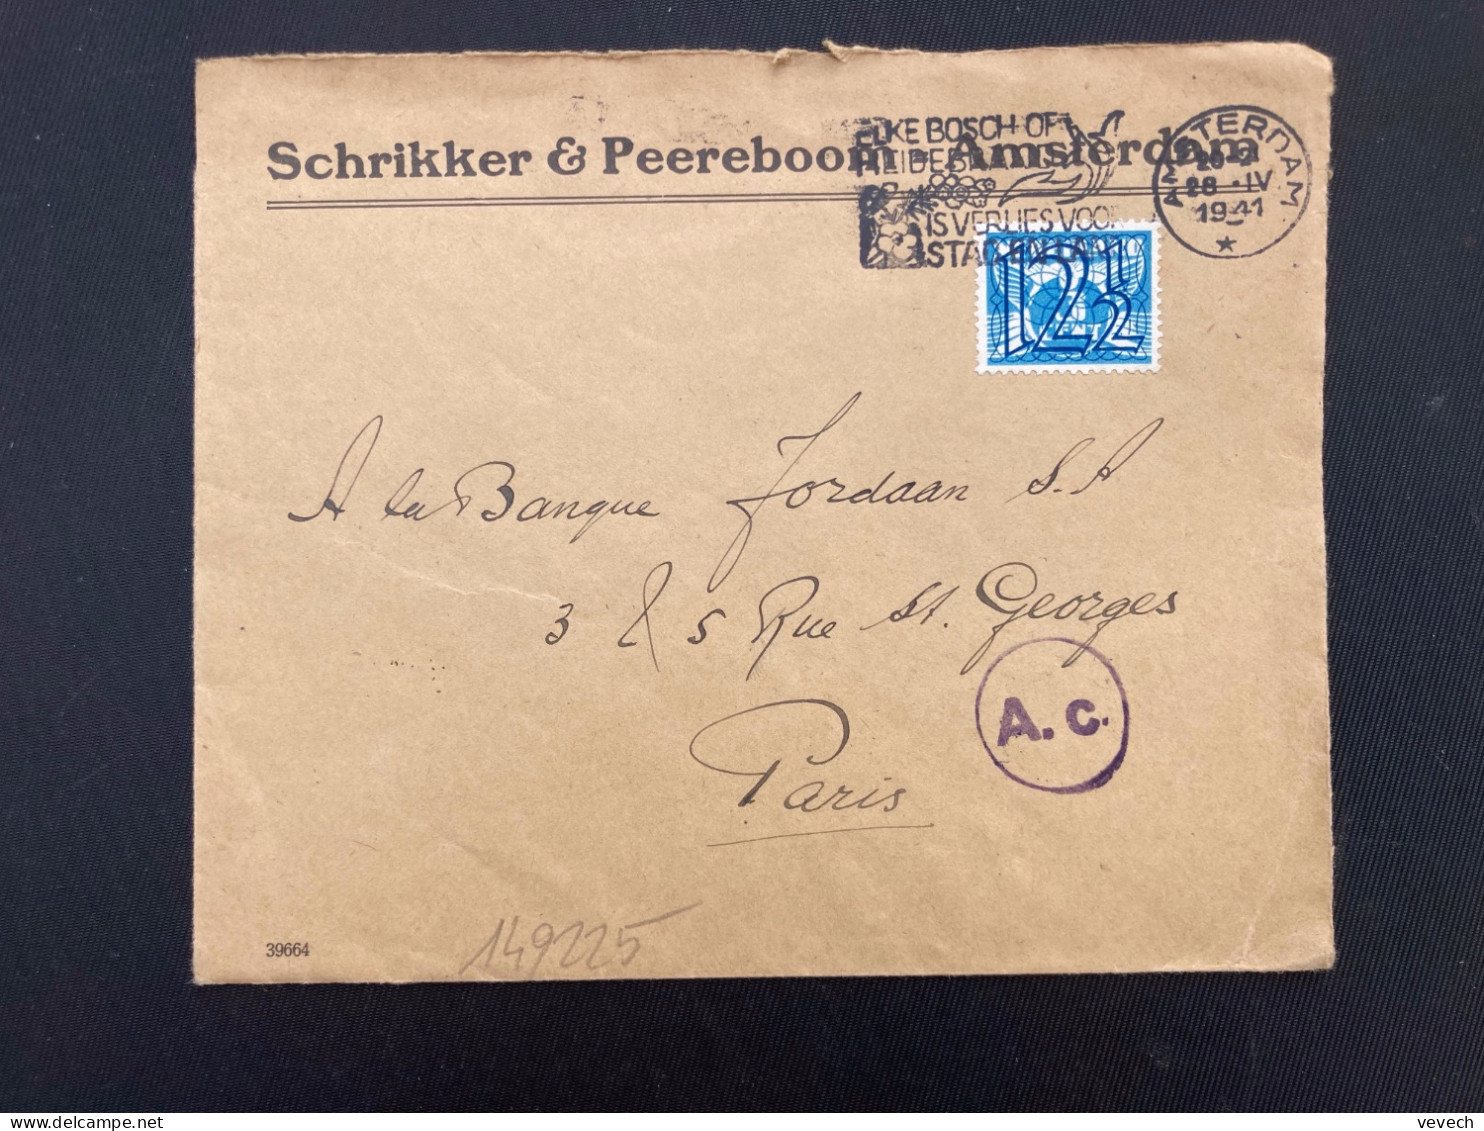 LETTRE SCHRIKKER & PEEREBOOM Pour La FRANCE TP 12 1/2c OBL.MEC.28 IV 1941 AMSTERDAM + CENSURE - Postal History